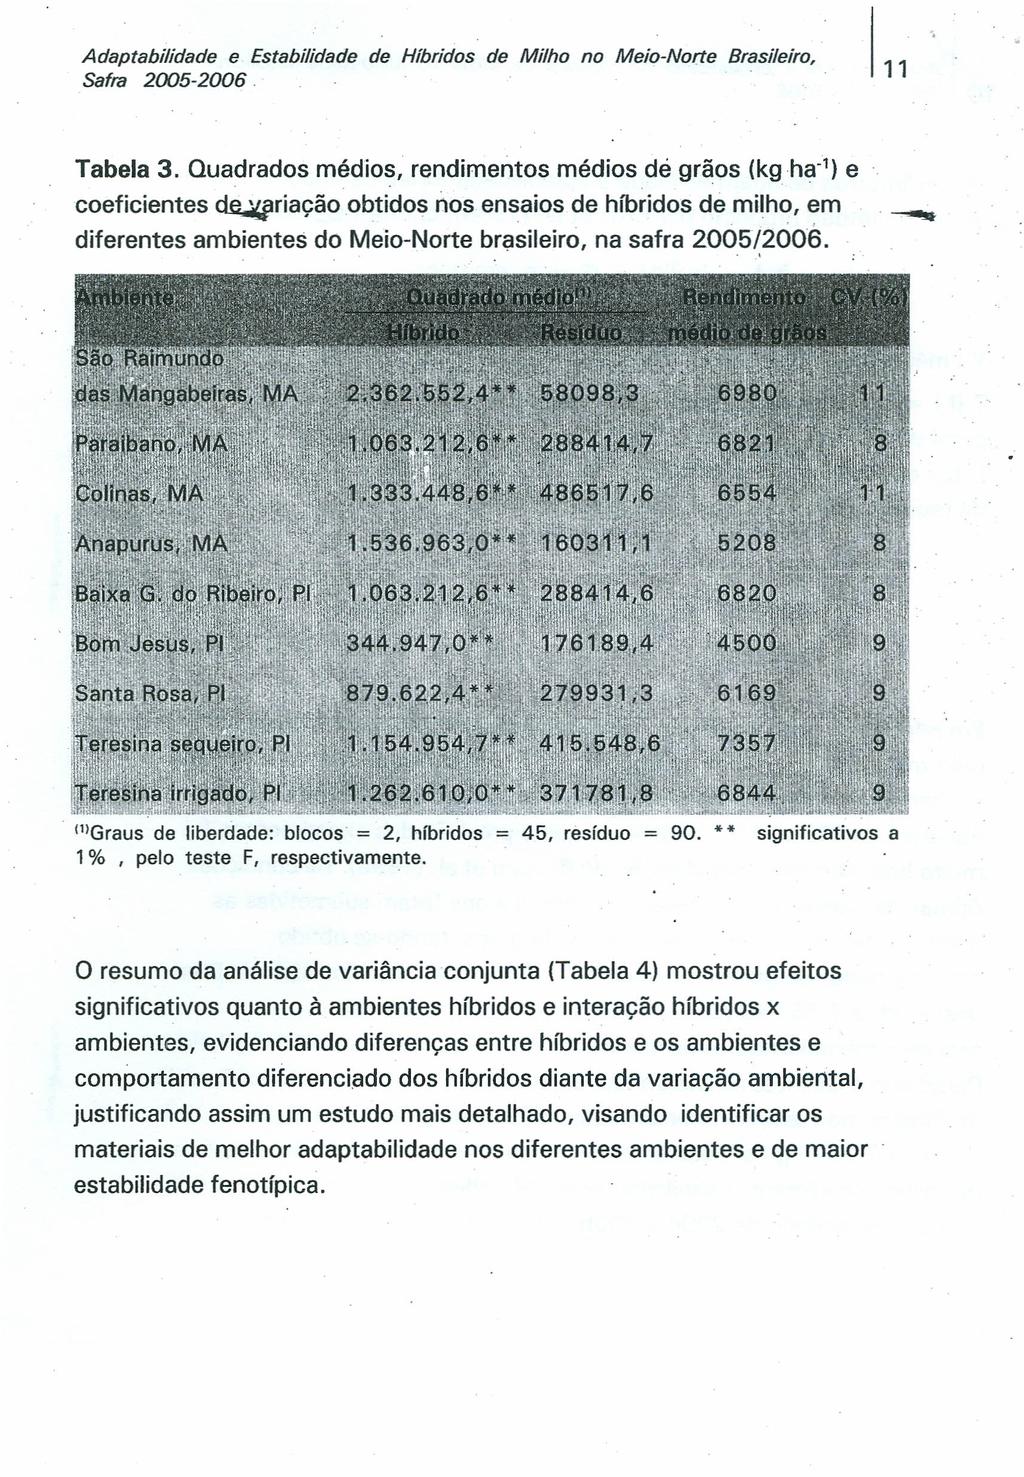 Adaptabilidade e Estabilidade de Híbridos de Milho no Meio-Norte Brasileiro, Safra 2005-2006. 111' Tabela 3.